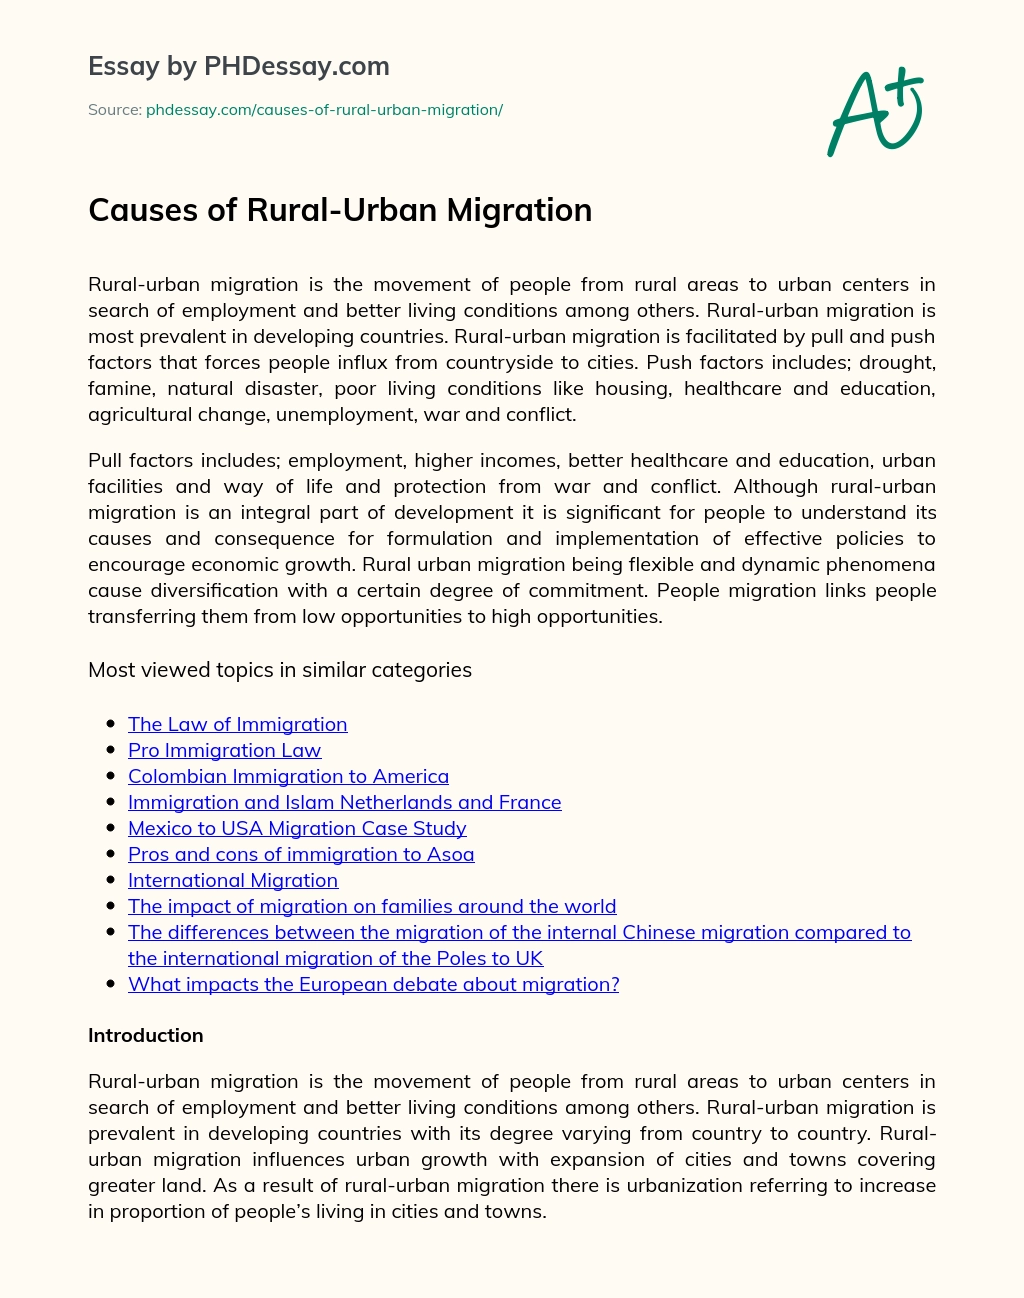 Causes of Rural-Urban Migration essay